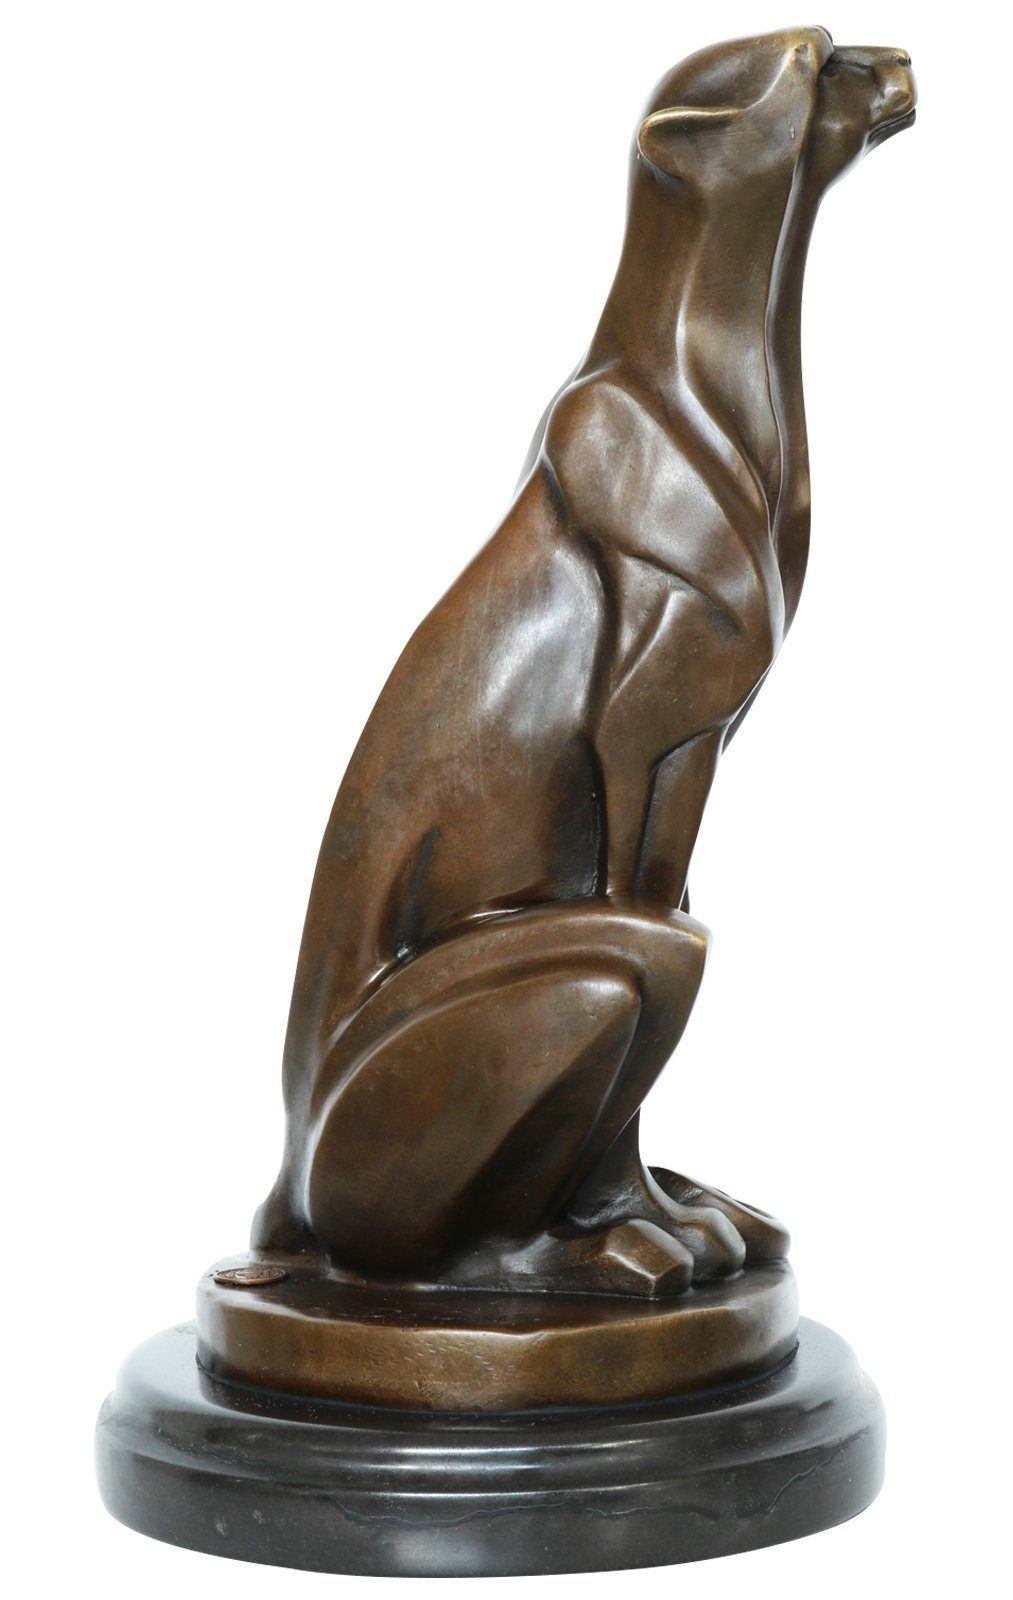 Aubaho Skulptur Bronzeskulptur Gepard im Antik-Stil Bronze Figur Statue - 29,7cm